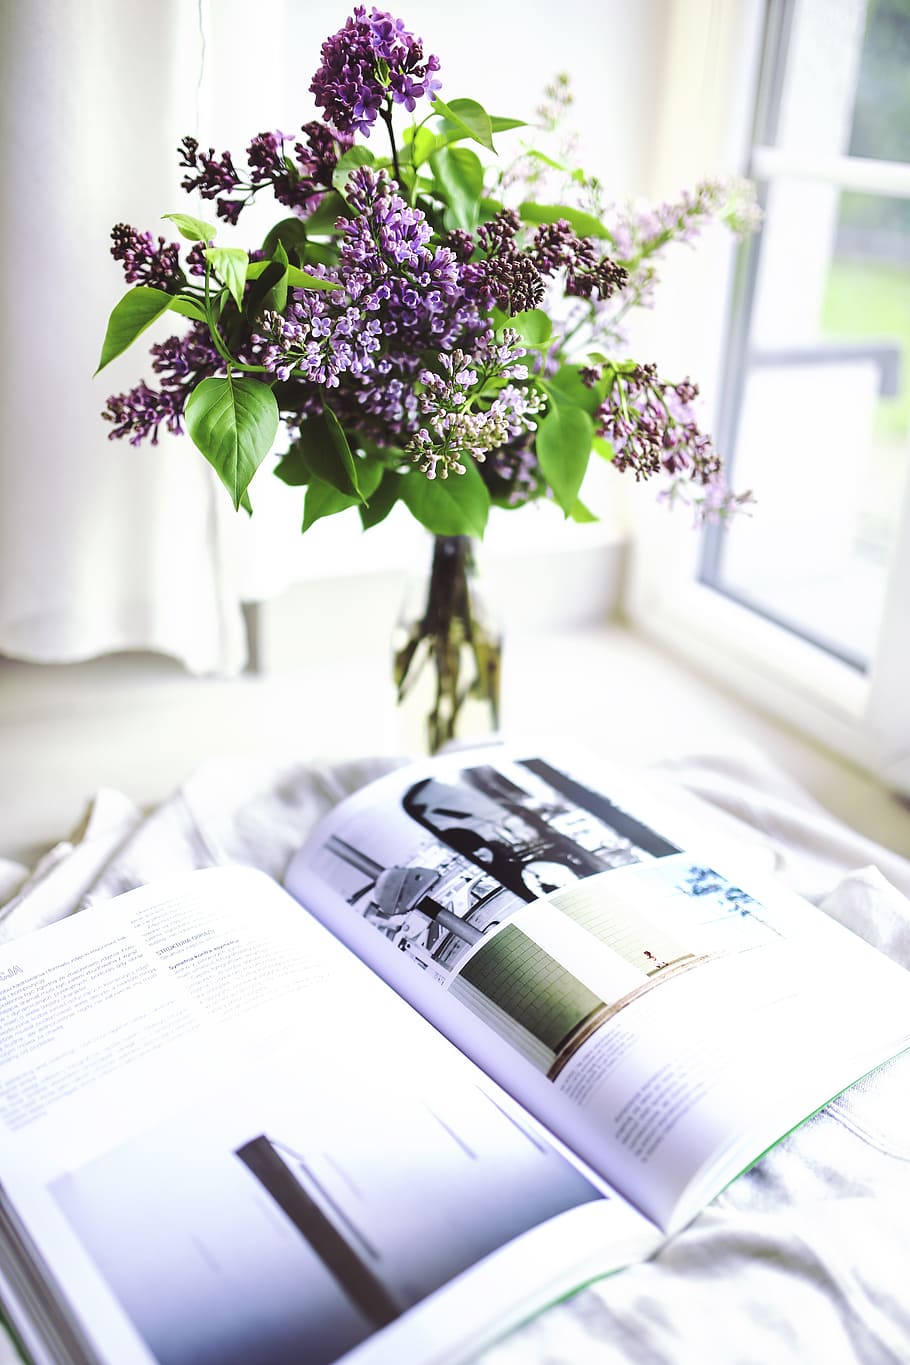 ungu, jelas, botol kaca, di samping, dibuka, buku, bunga, tanaman, sambucus, koran